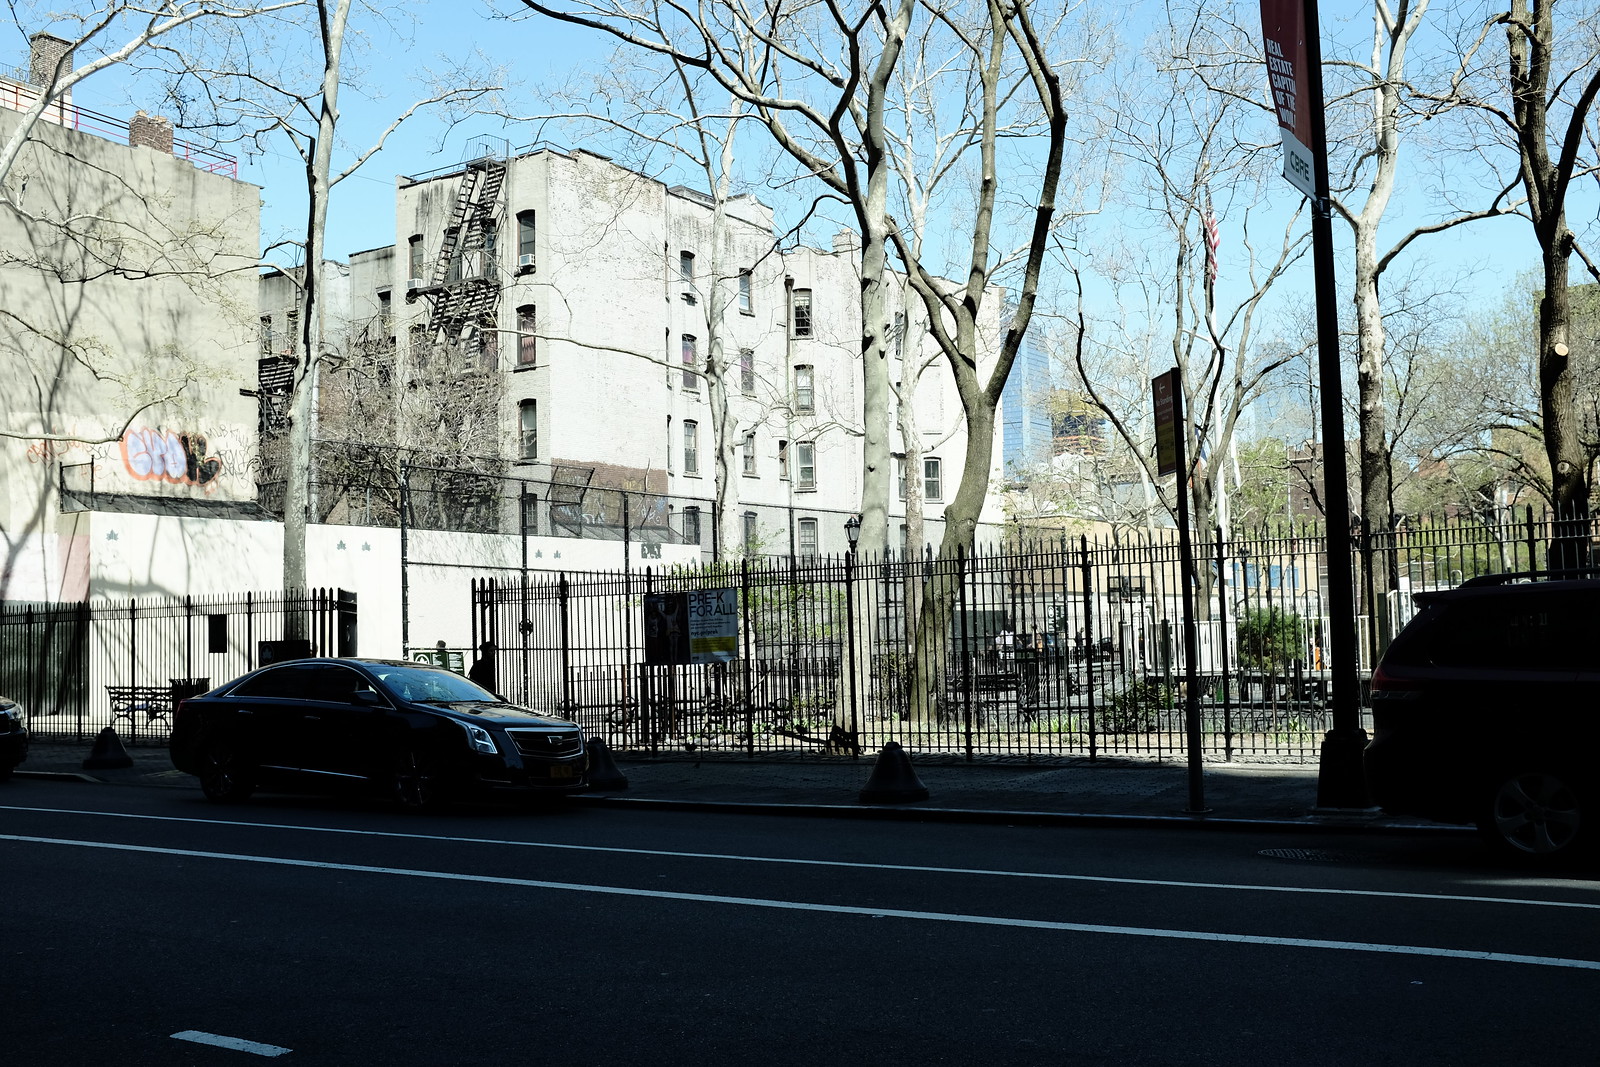 The New York Chelsea photo by FUJIFILM X100S.